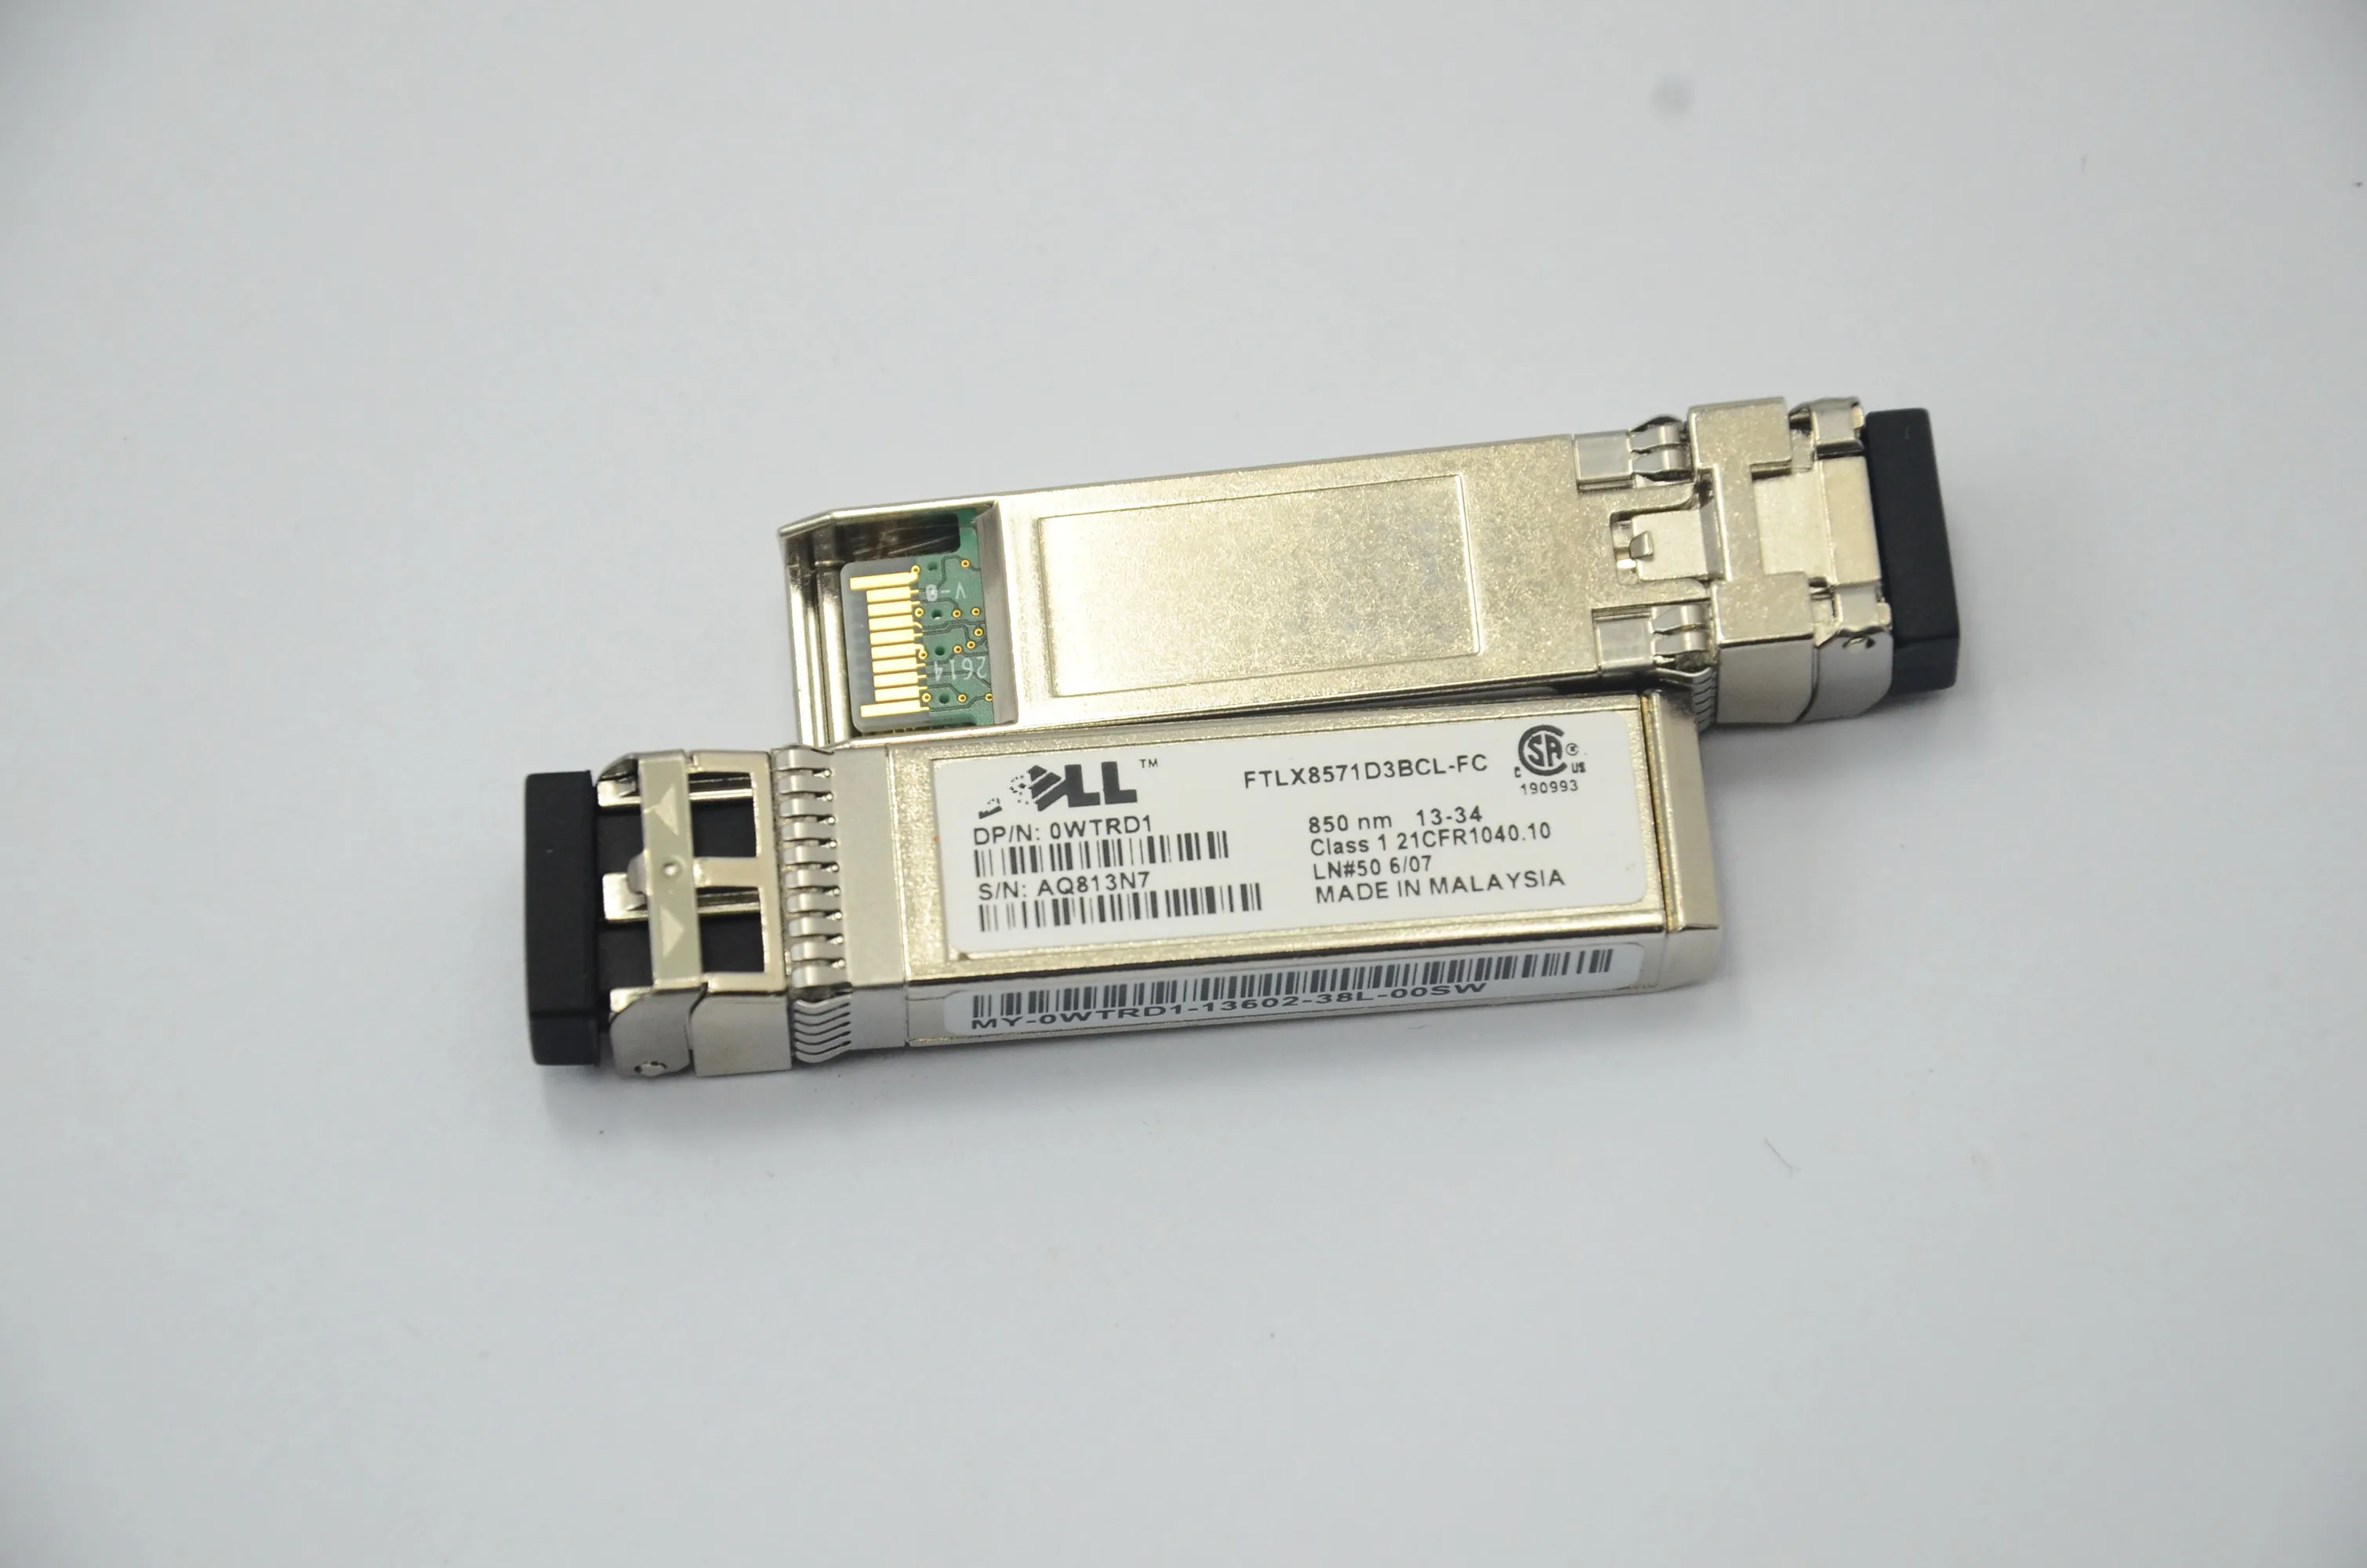 Del/10gb sfp module/0WTRD1/FTLX8571D3BCL-FC/10G 850NM SFP+ Network adapter Switch Optical fiber module/10g sfp module